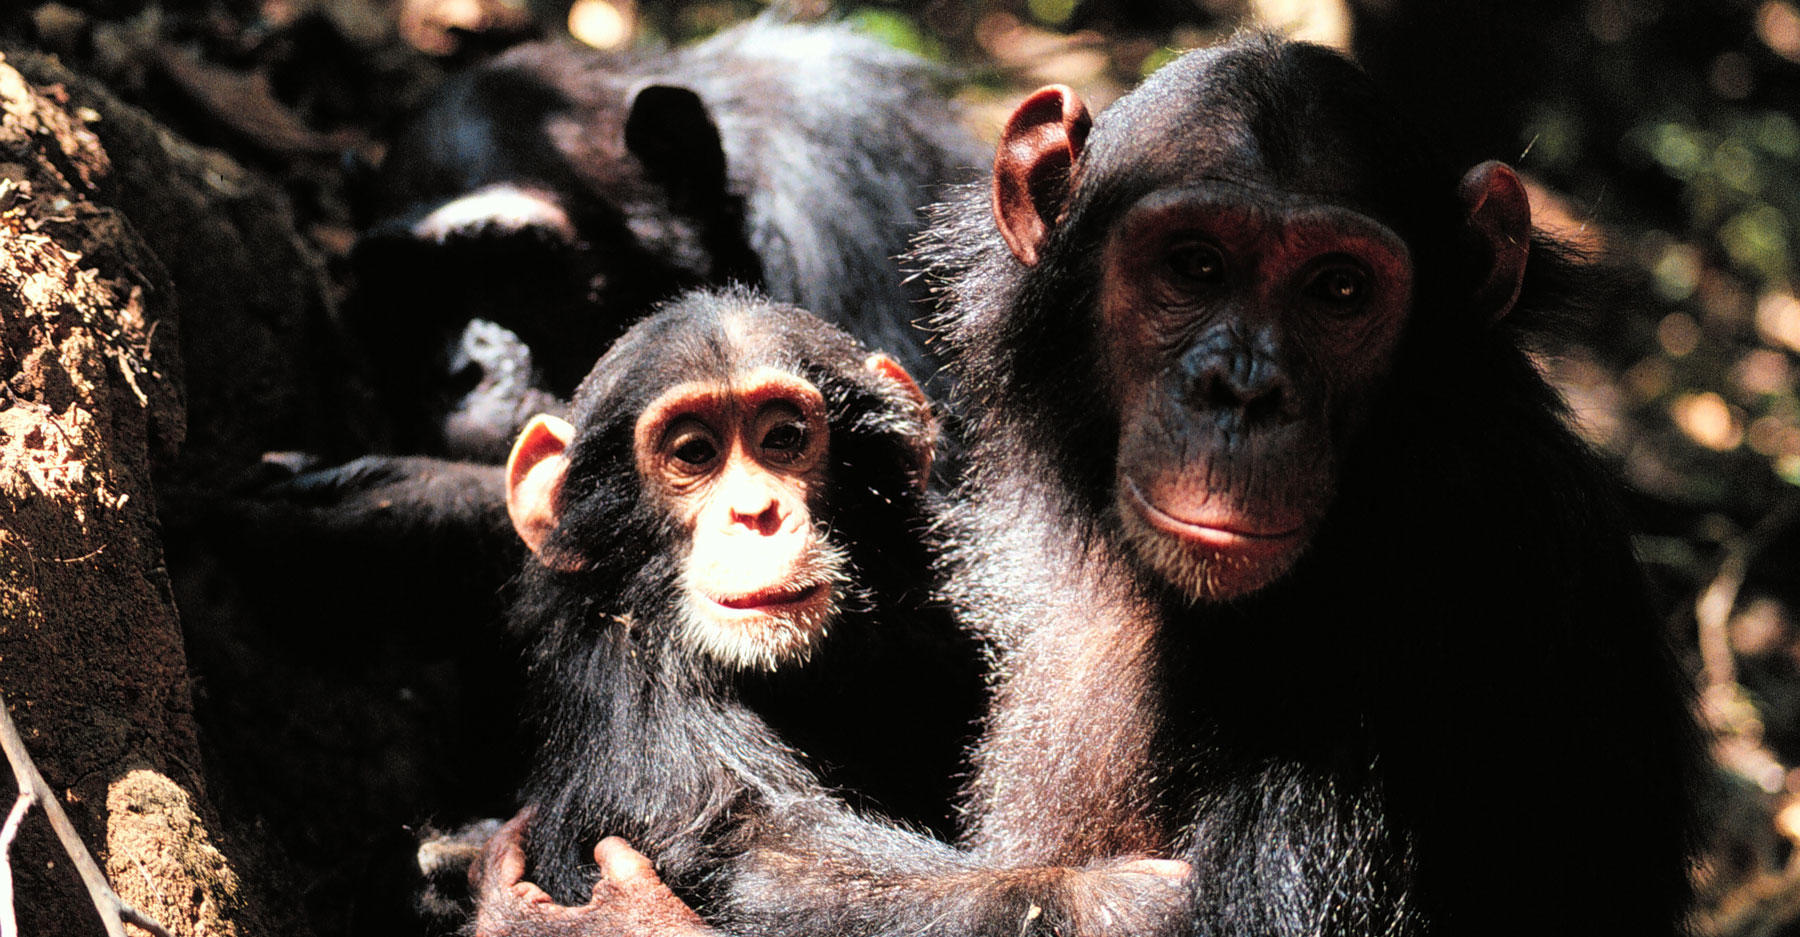 chimpanzee lifespan wild